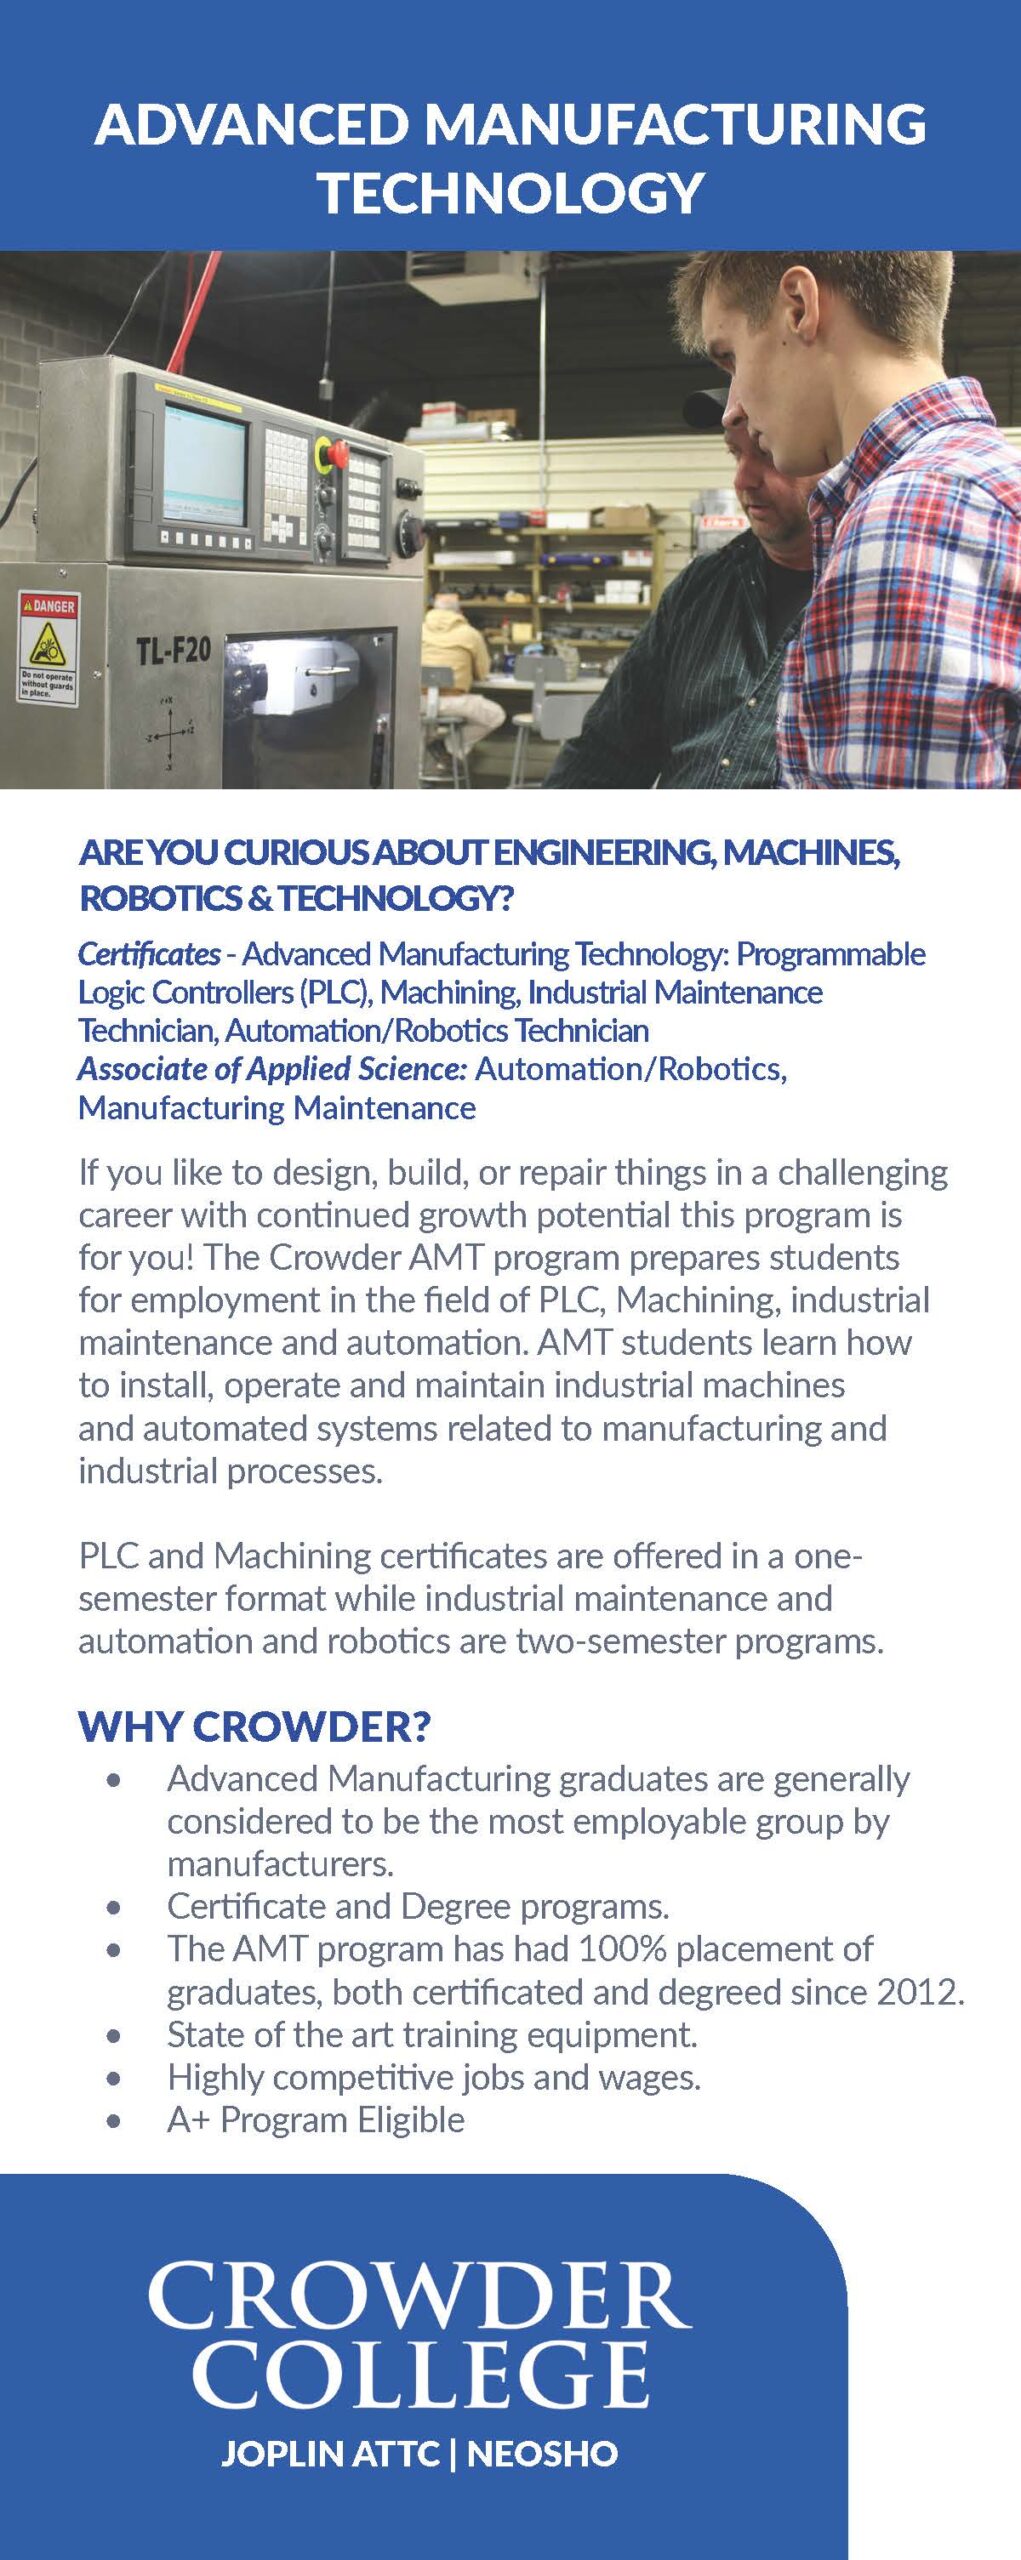 Advanced Manufacturing program at Crowder College